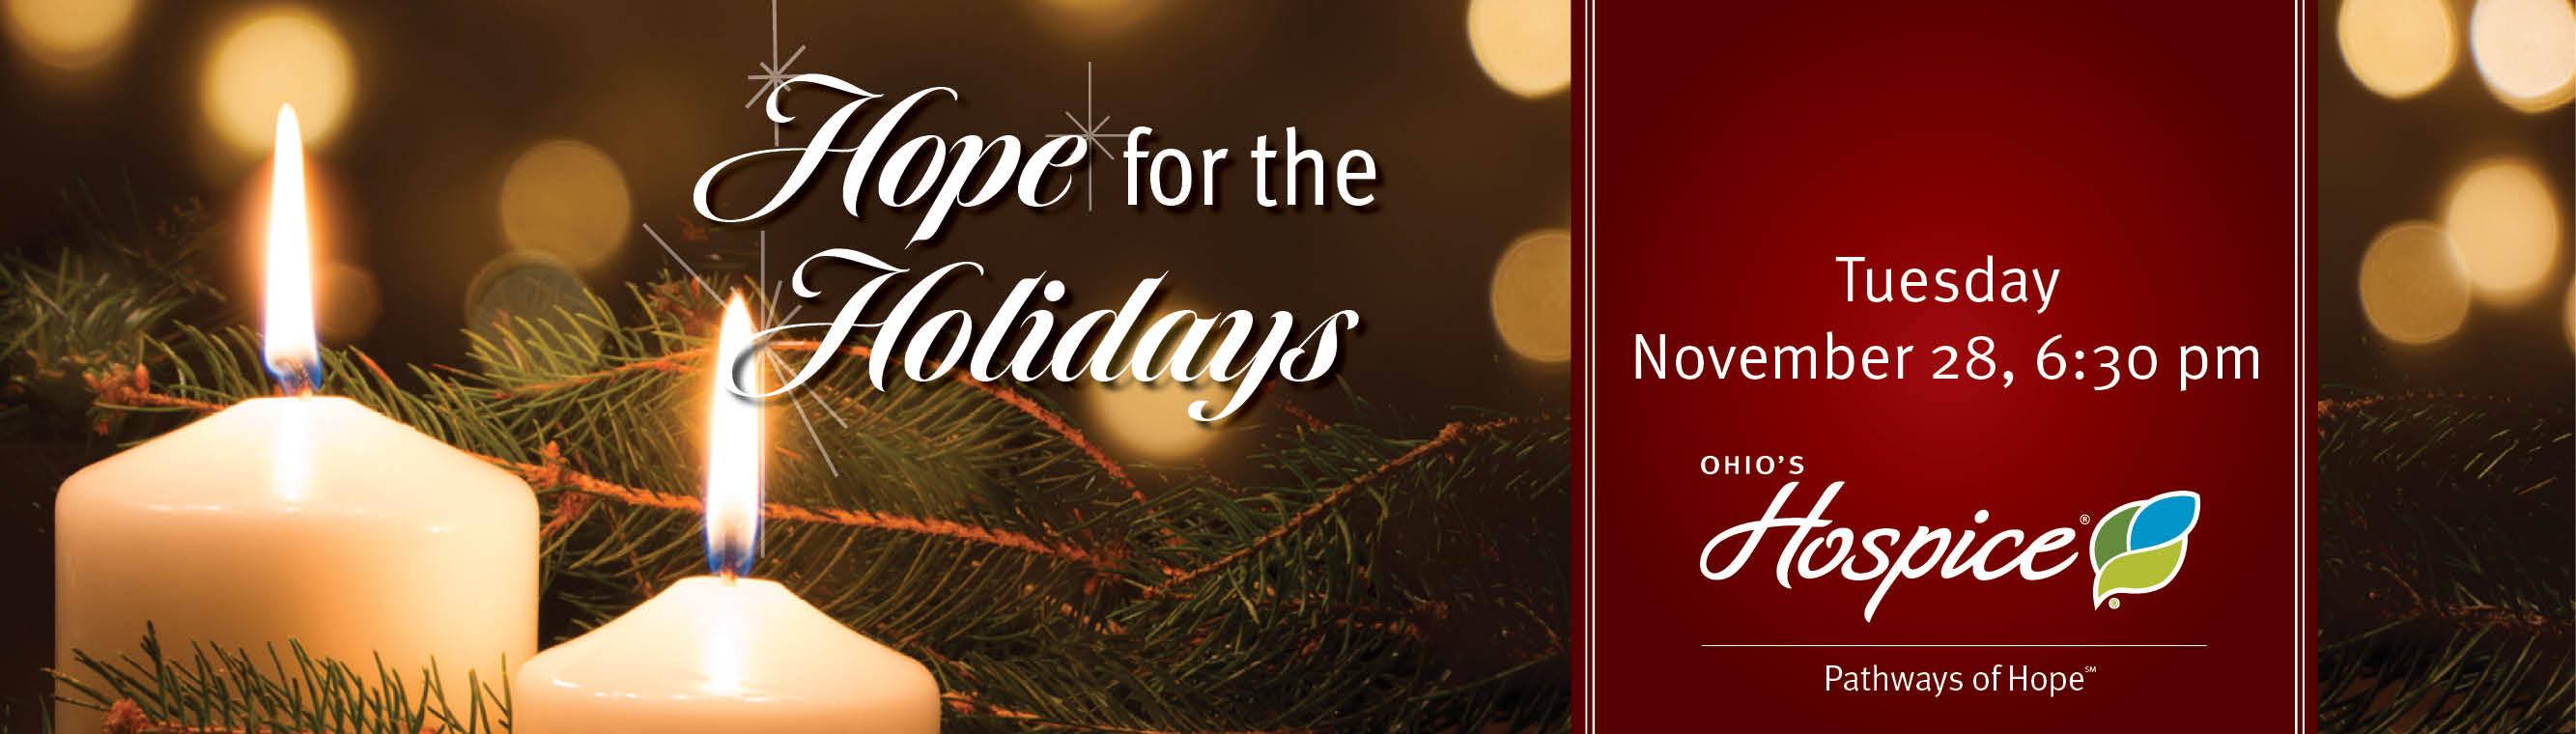 Hope for the Holidays. Tuesday, November 28, 6:30 pm. Ohio's Hospice Pathways of Hope